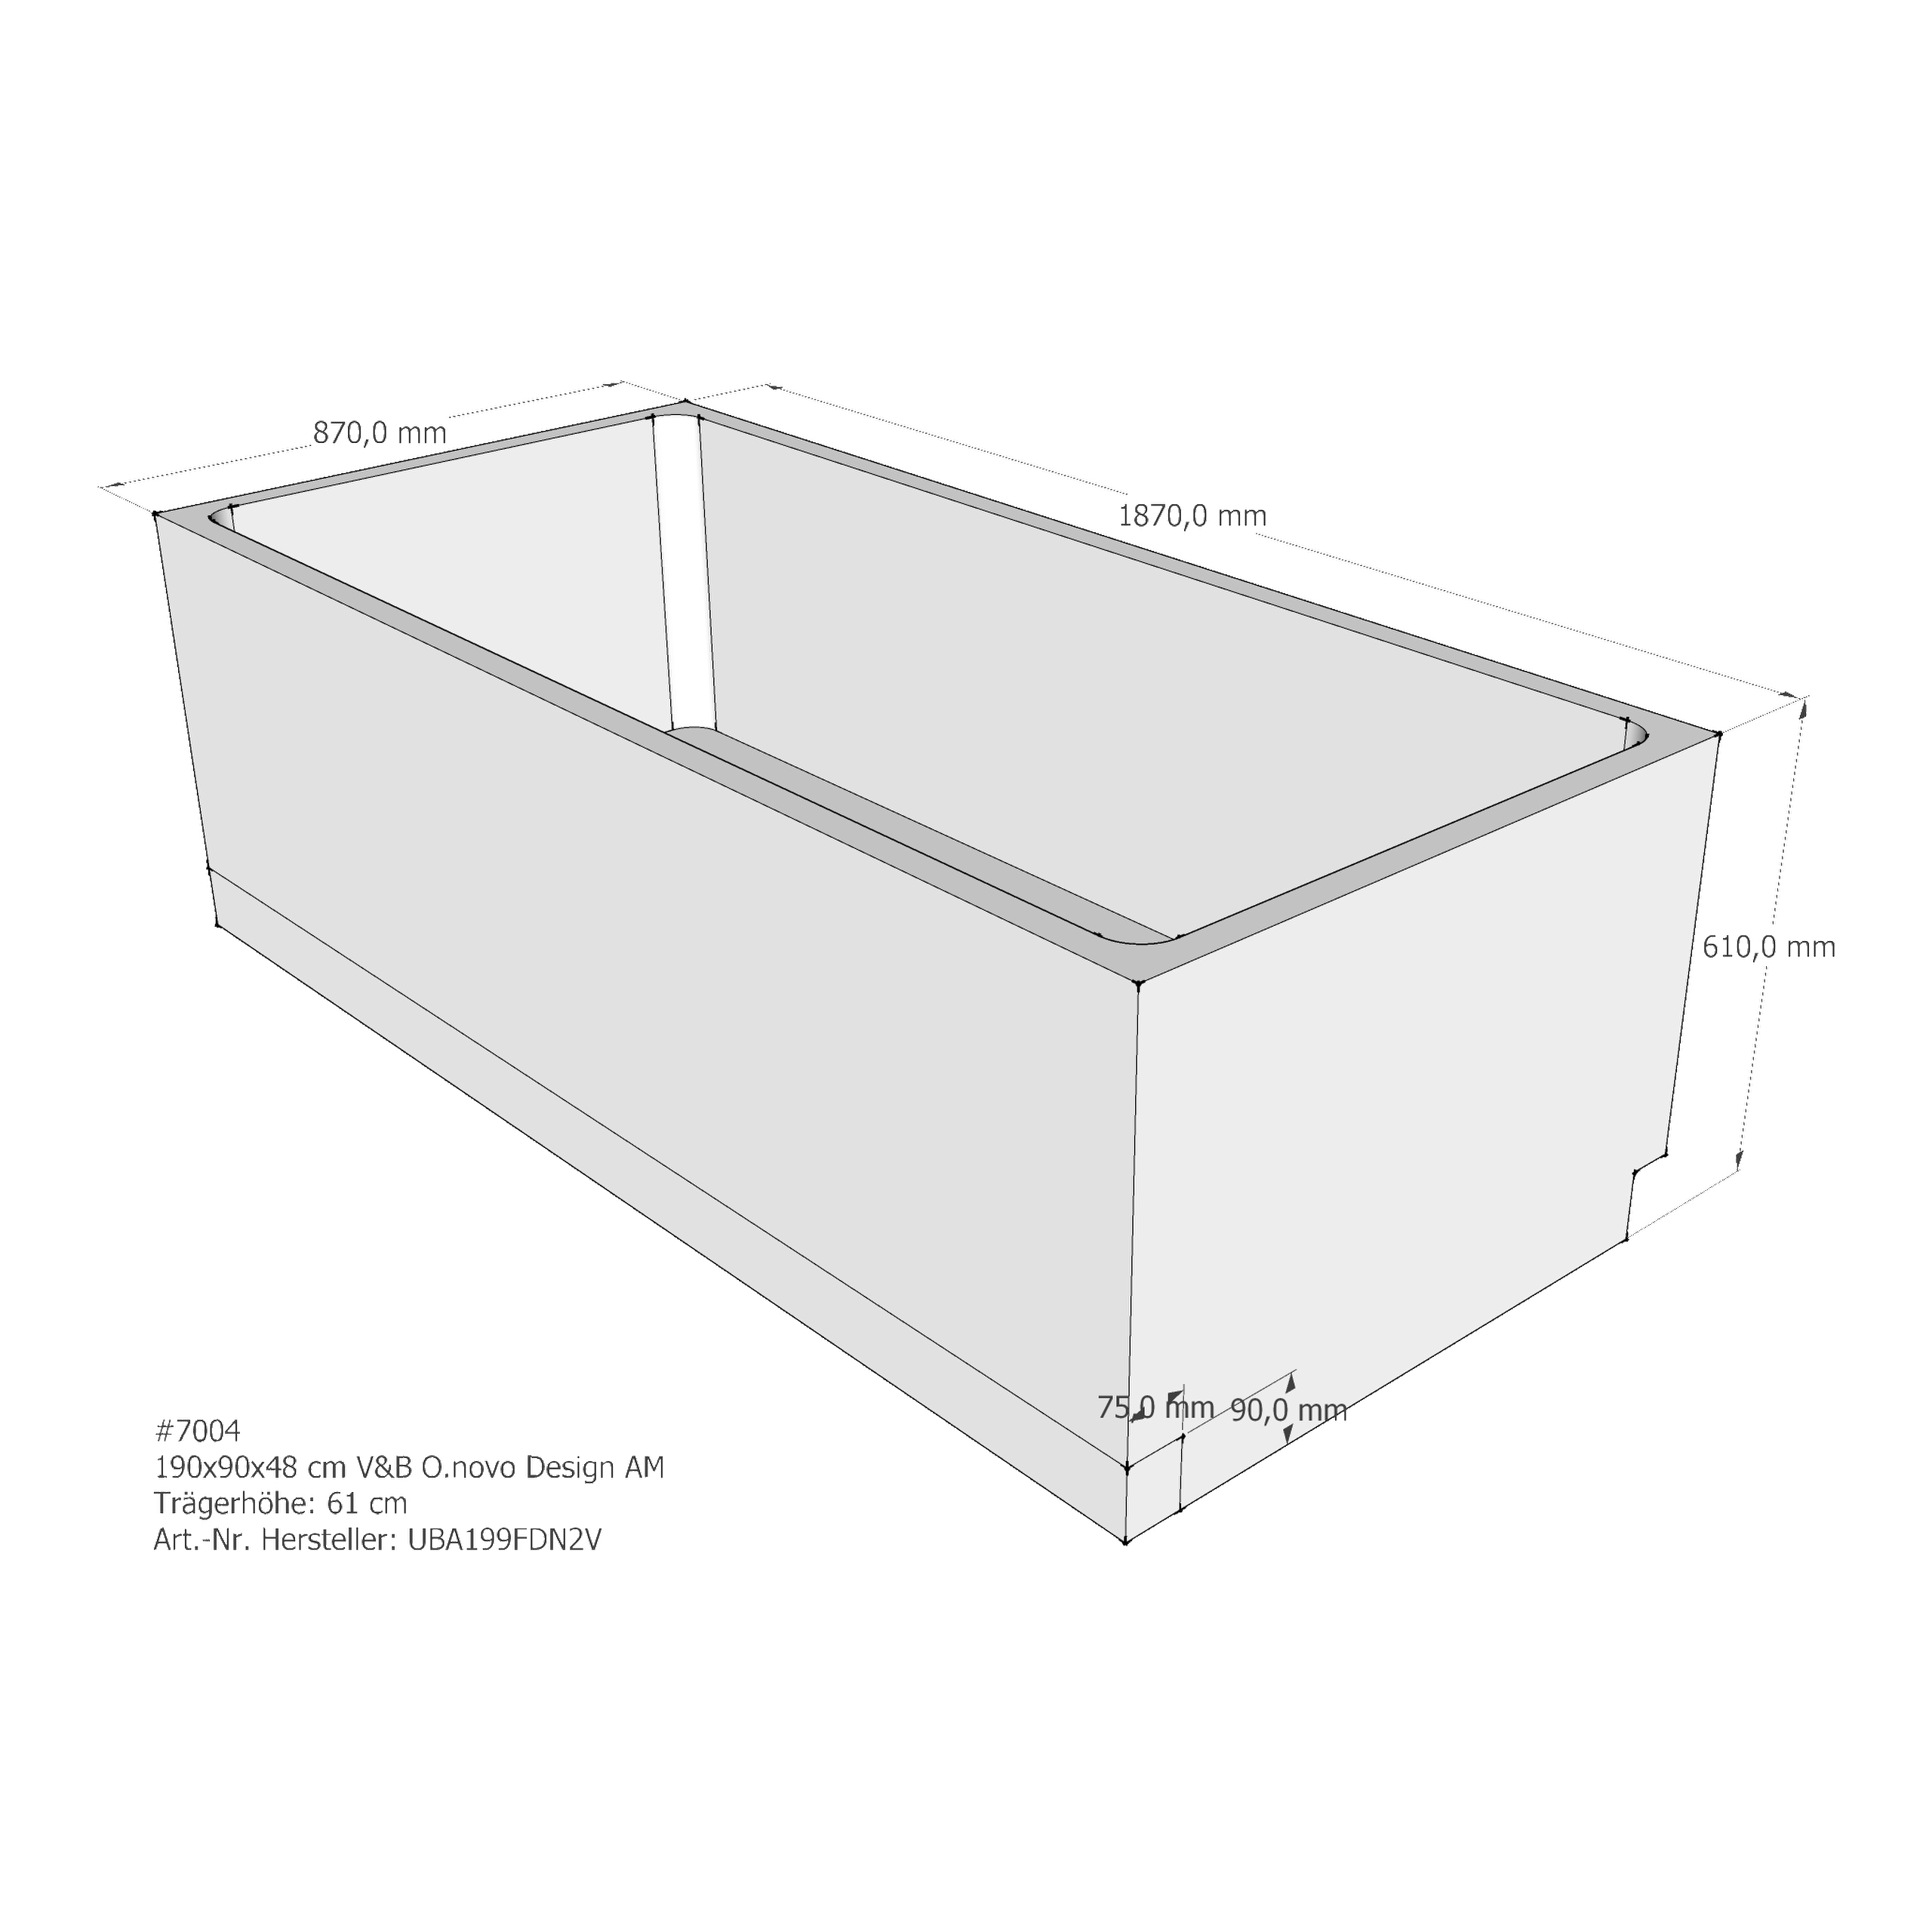 Badewannenträger für Villeroy & Boch O.novo Design 190 × 90 × 48 cm